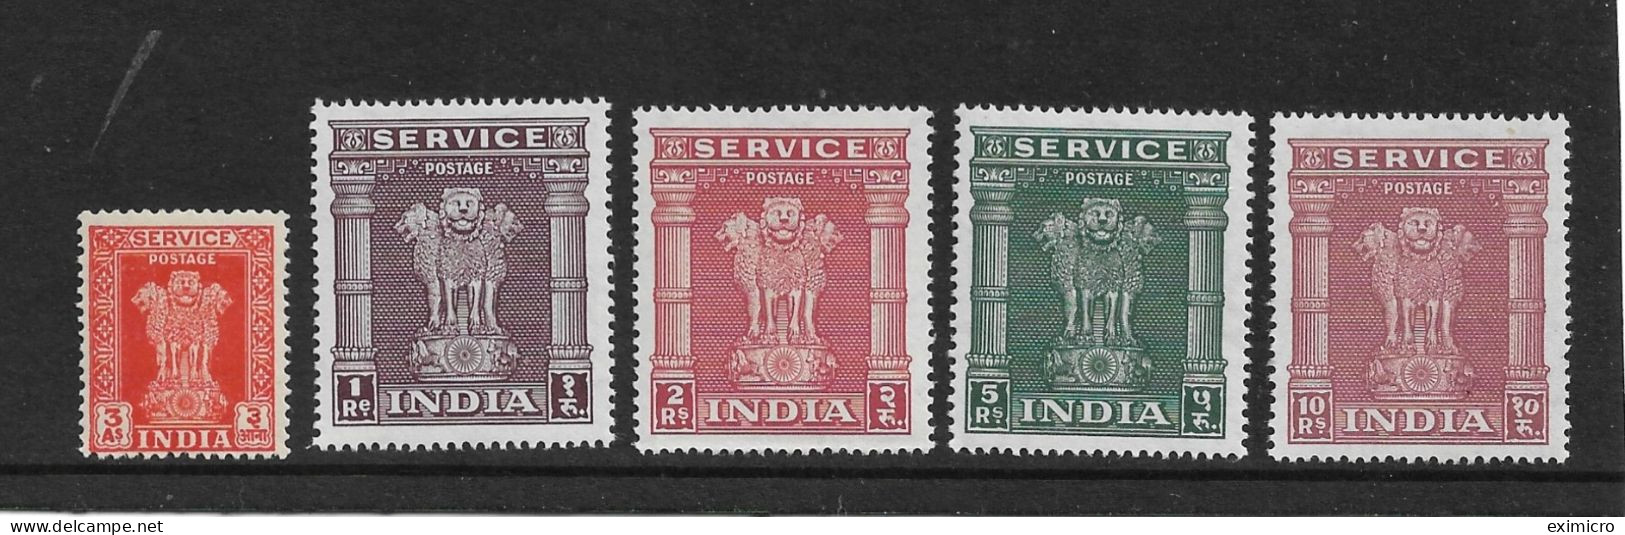 INDIA 1950 - 1951 OFFICIALS 3a, 1R - 10R SG O156, O161 - O164 UNMOUNTED MINT Cat £27.75 - Francobolli Di Servizio